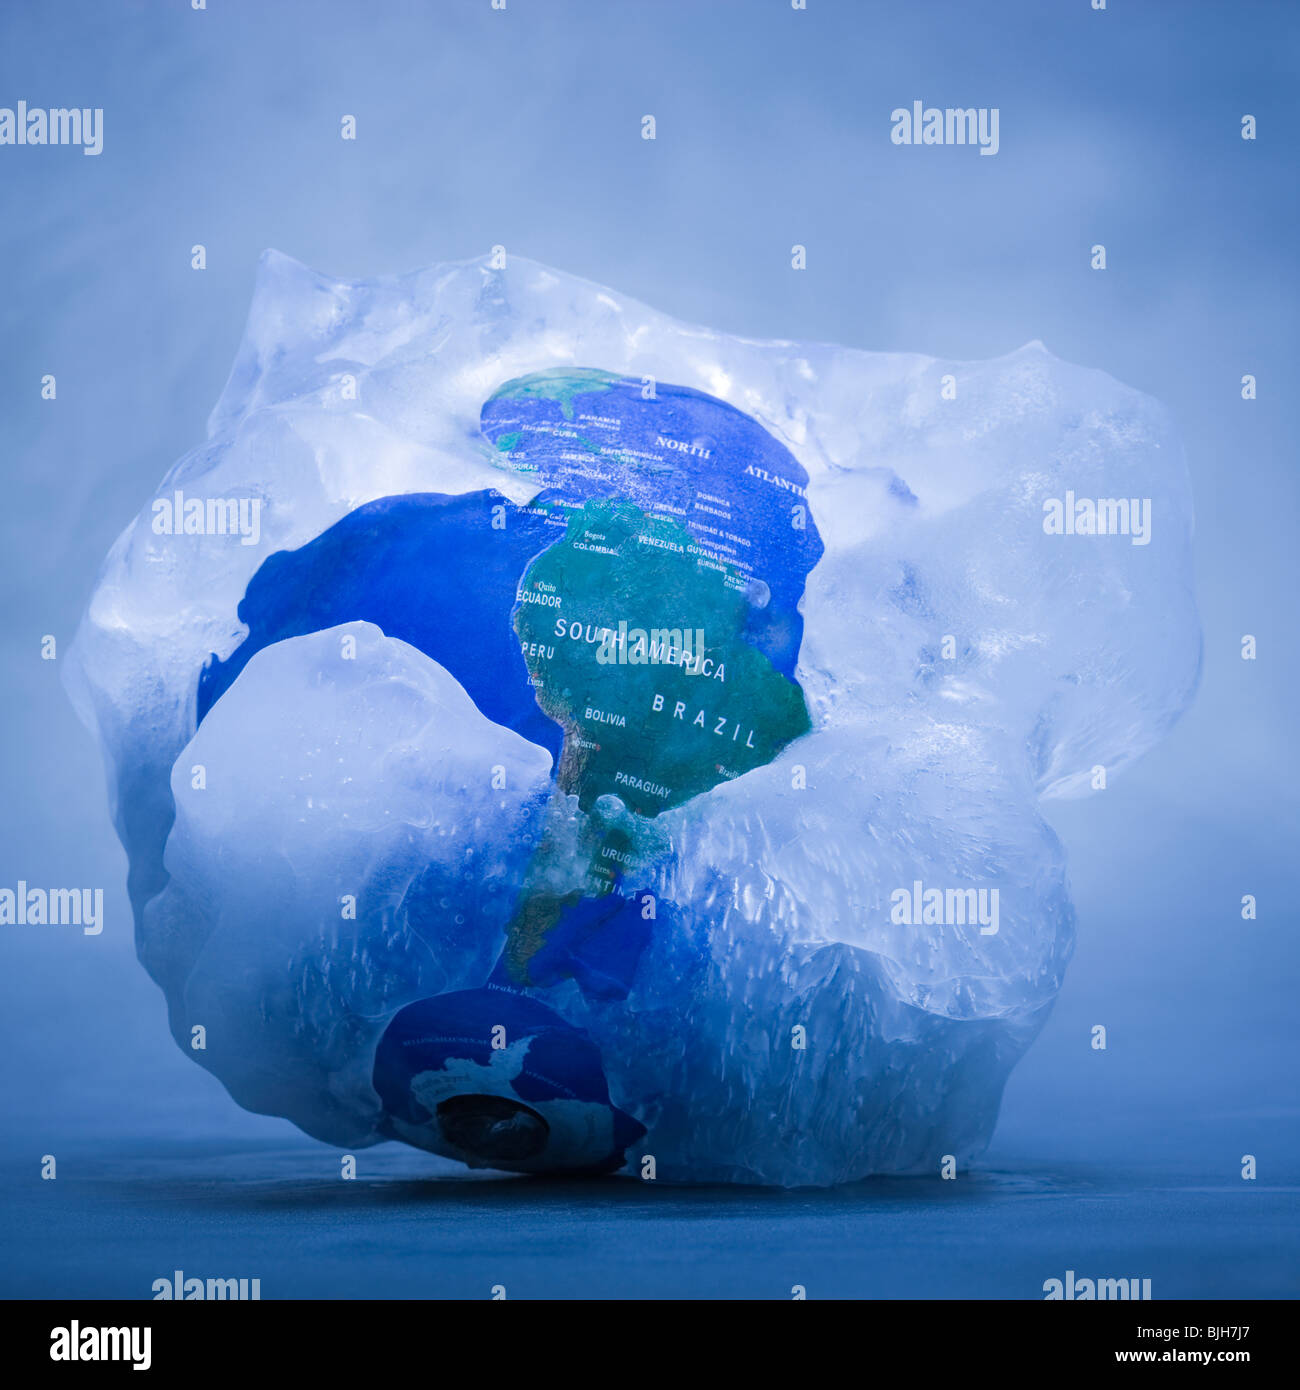 globe covered in ice Stock Photo